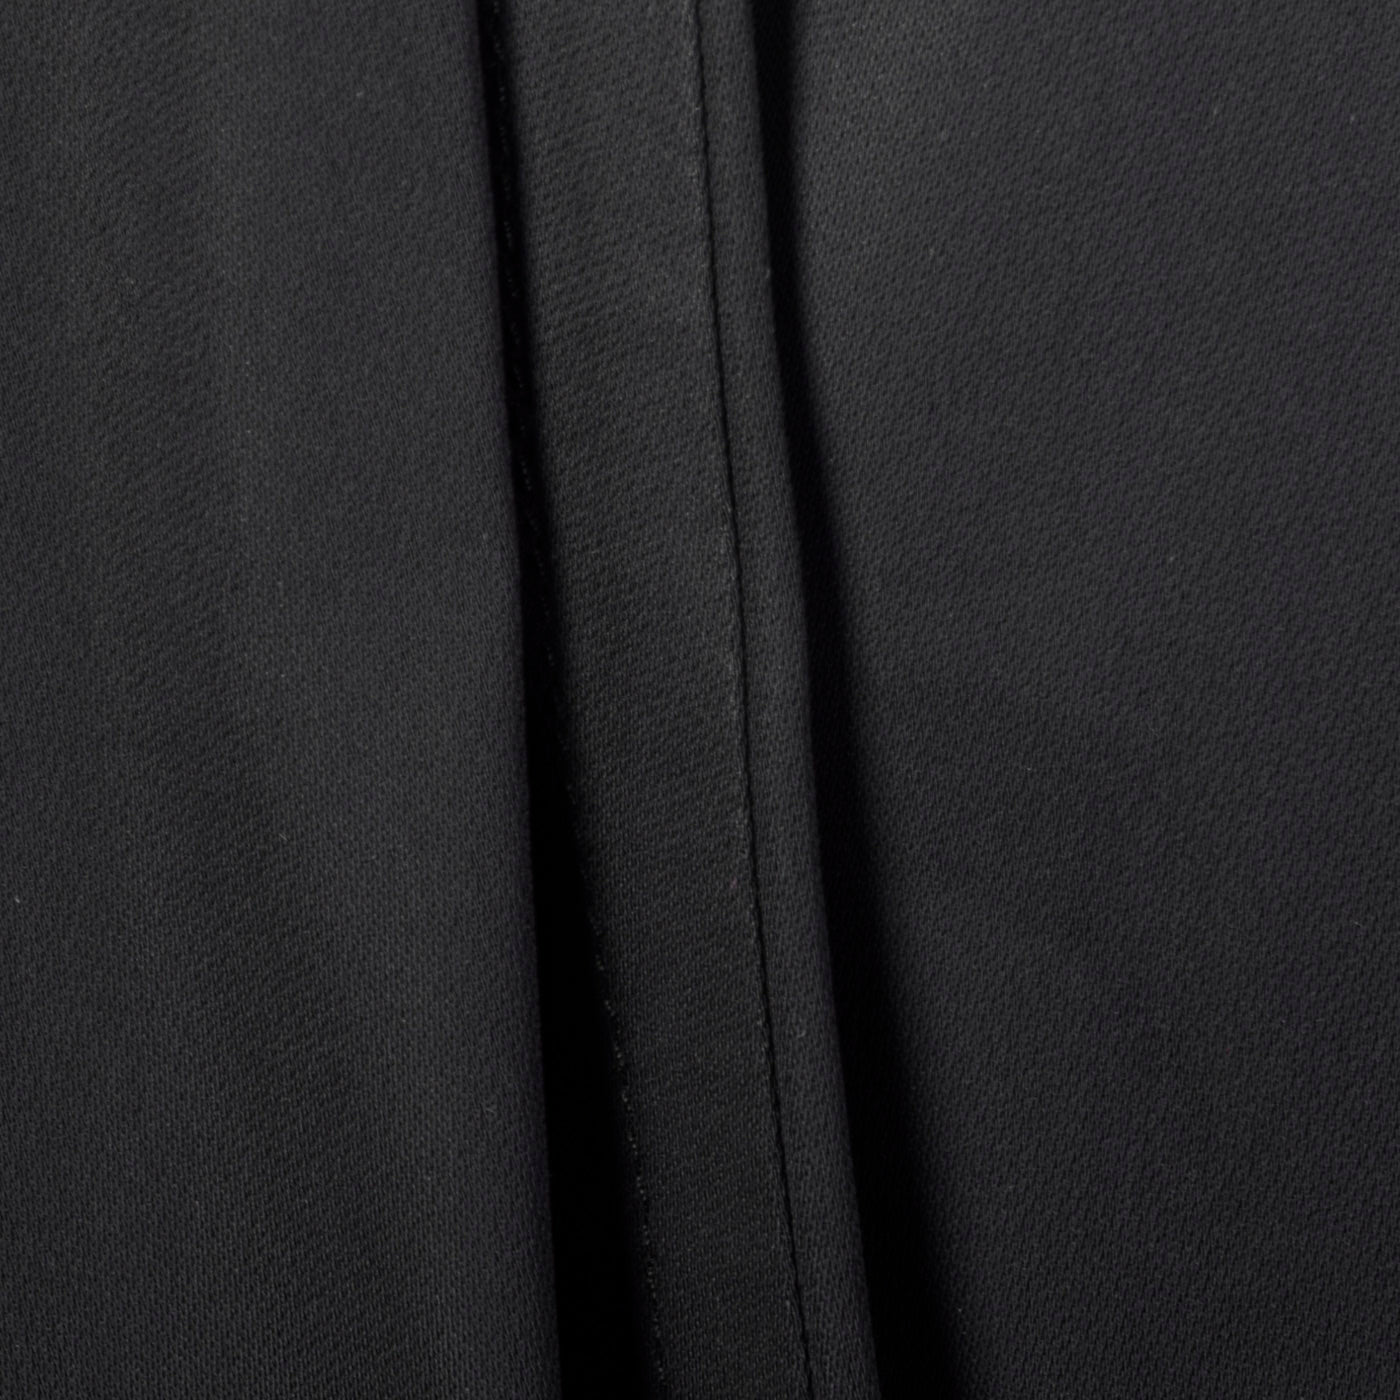 2015 Black Cocoon Dress